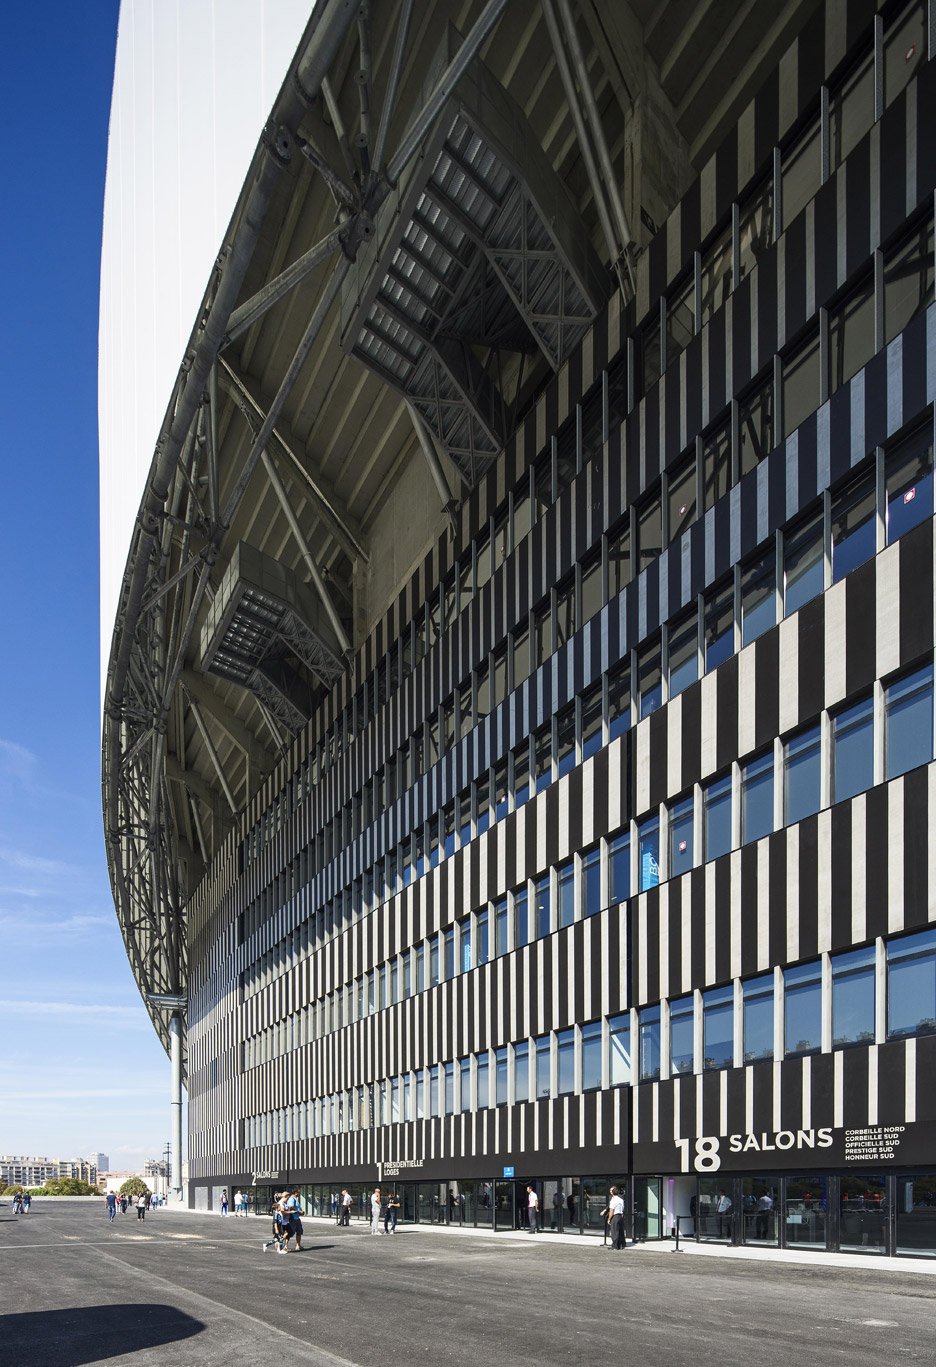 Stade Vélodrome in Marseille by SCAU